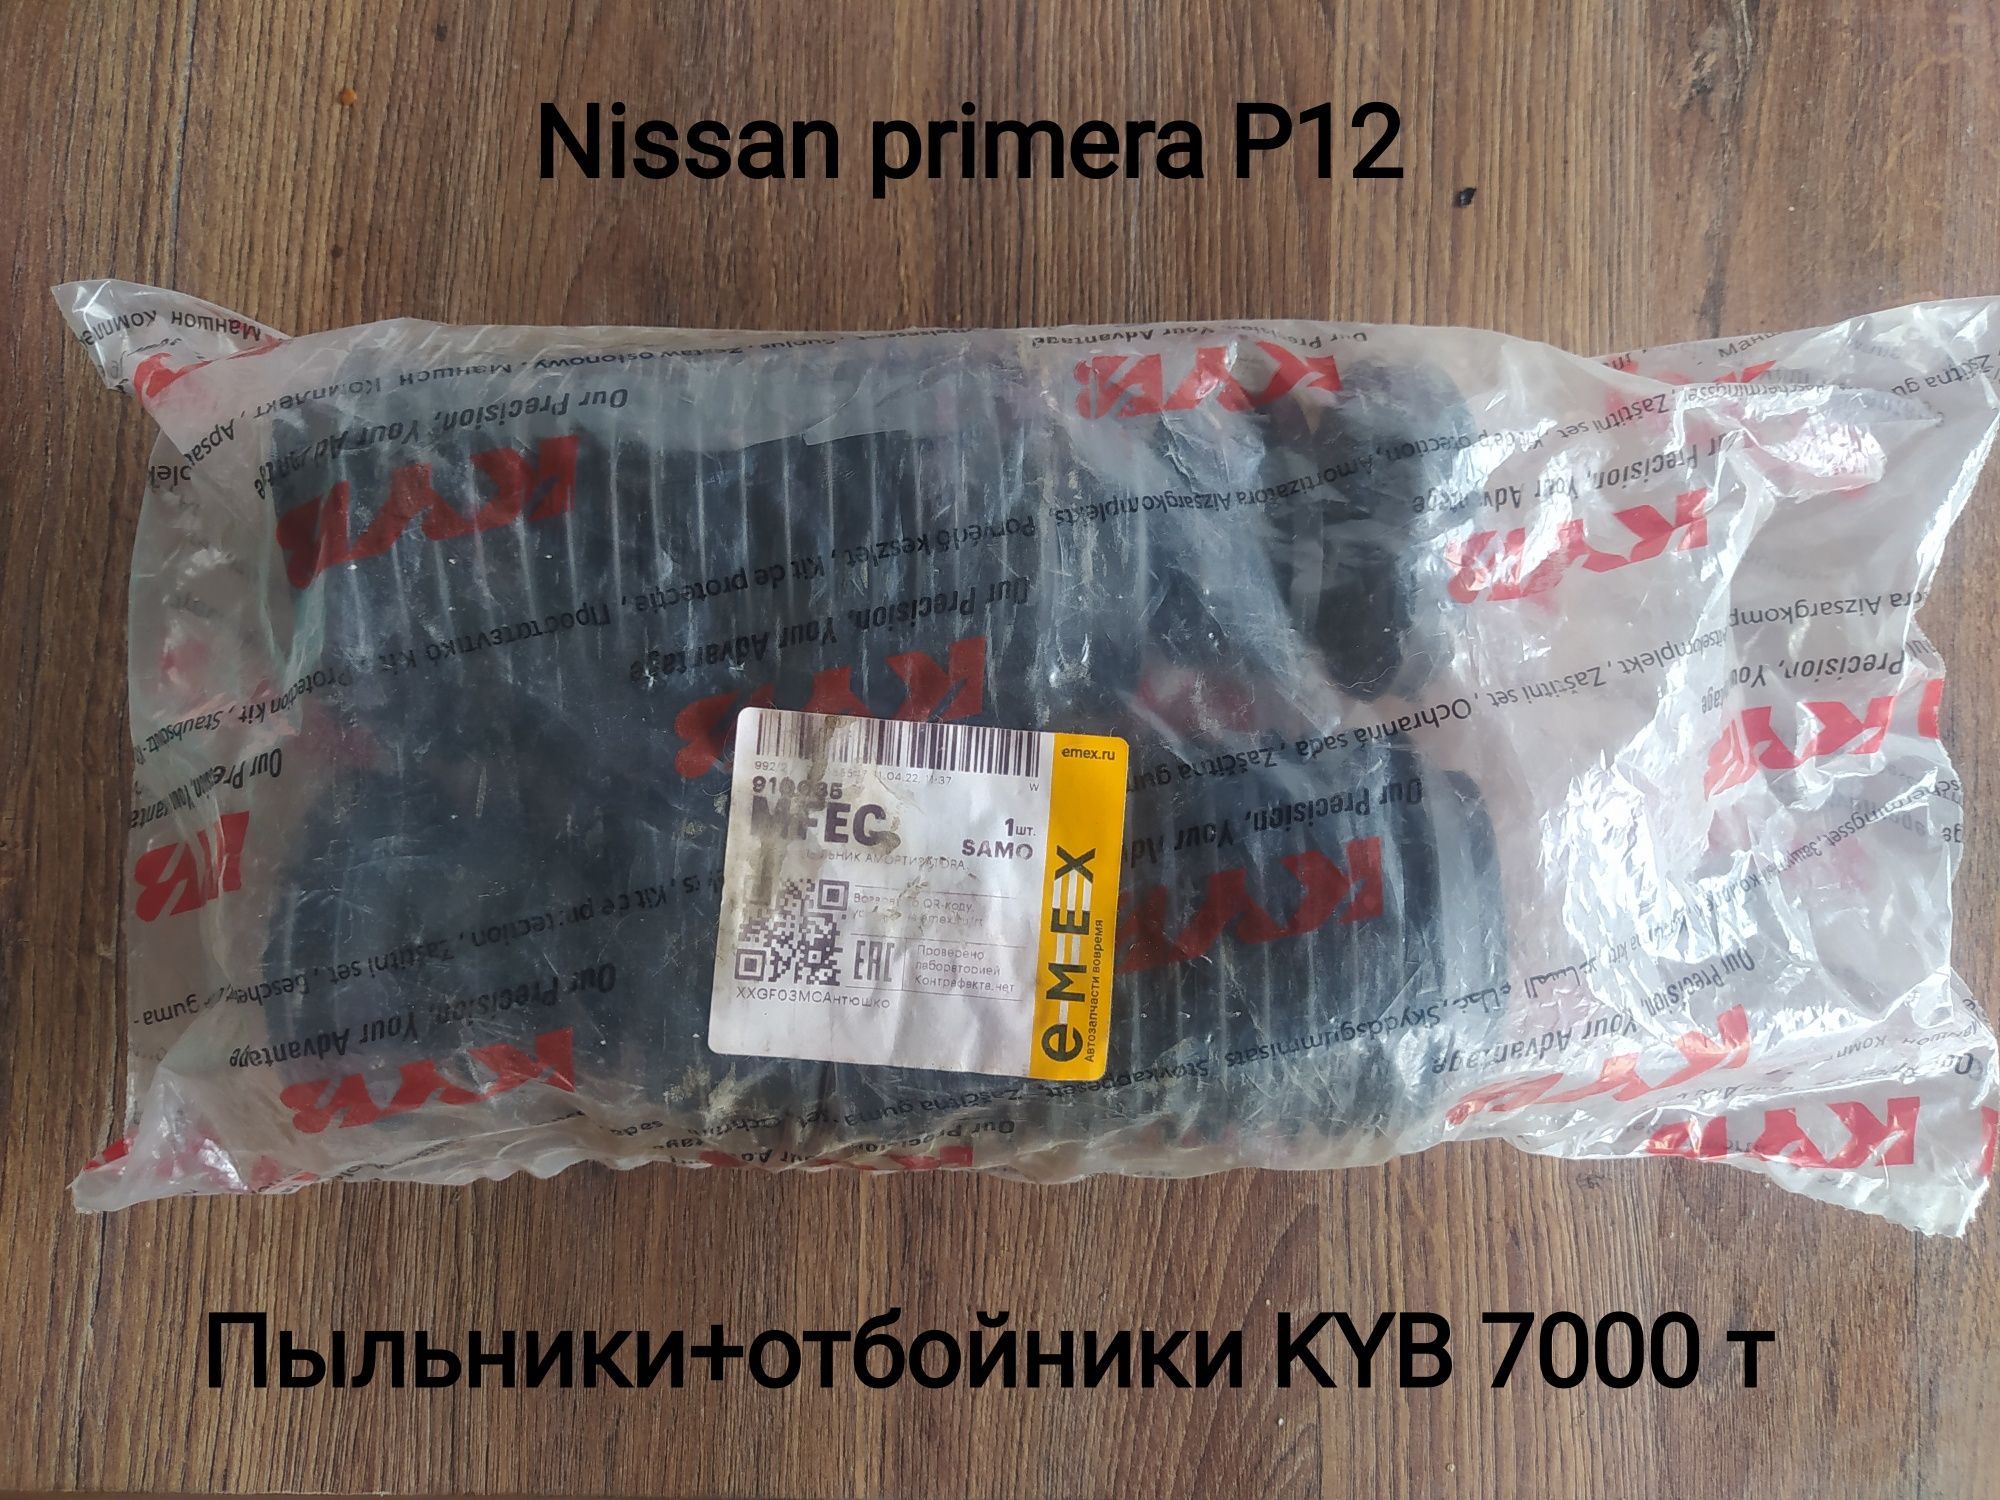 Nissan primera P12 Пыльники+отбойники KYB